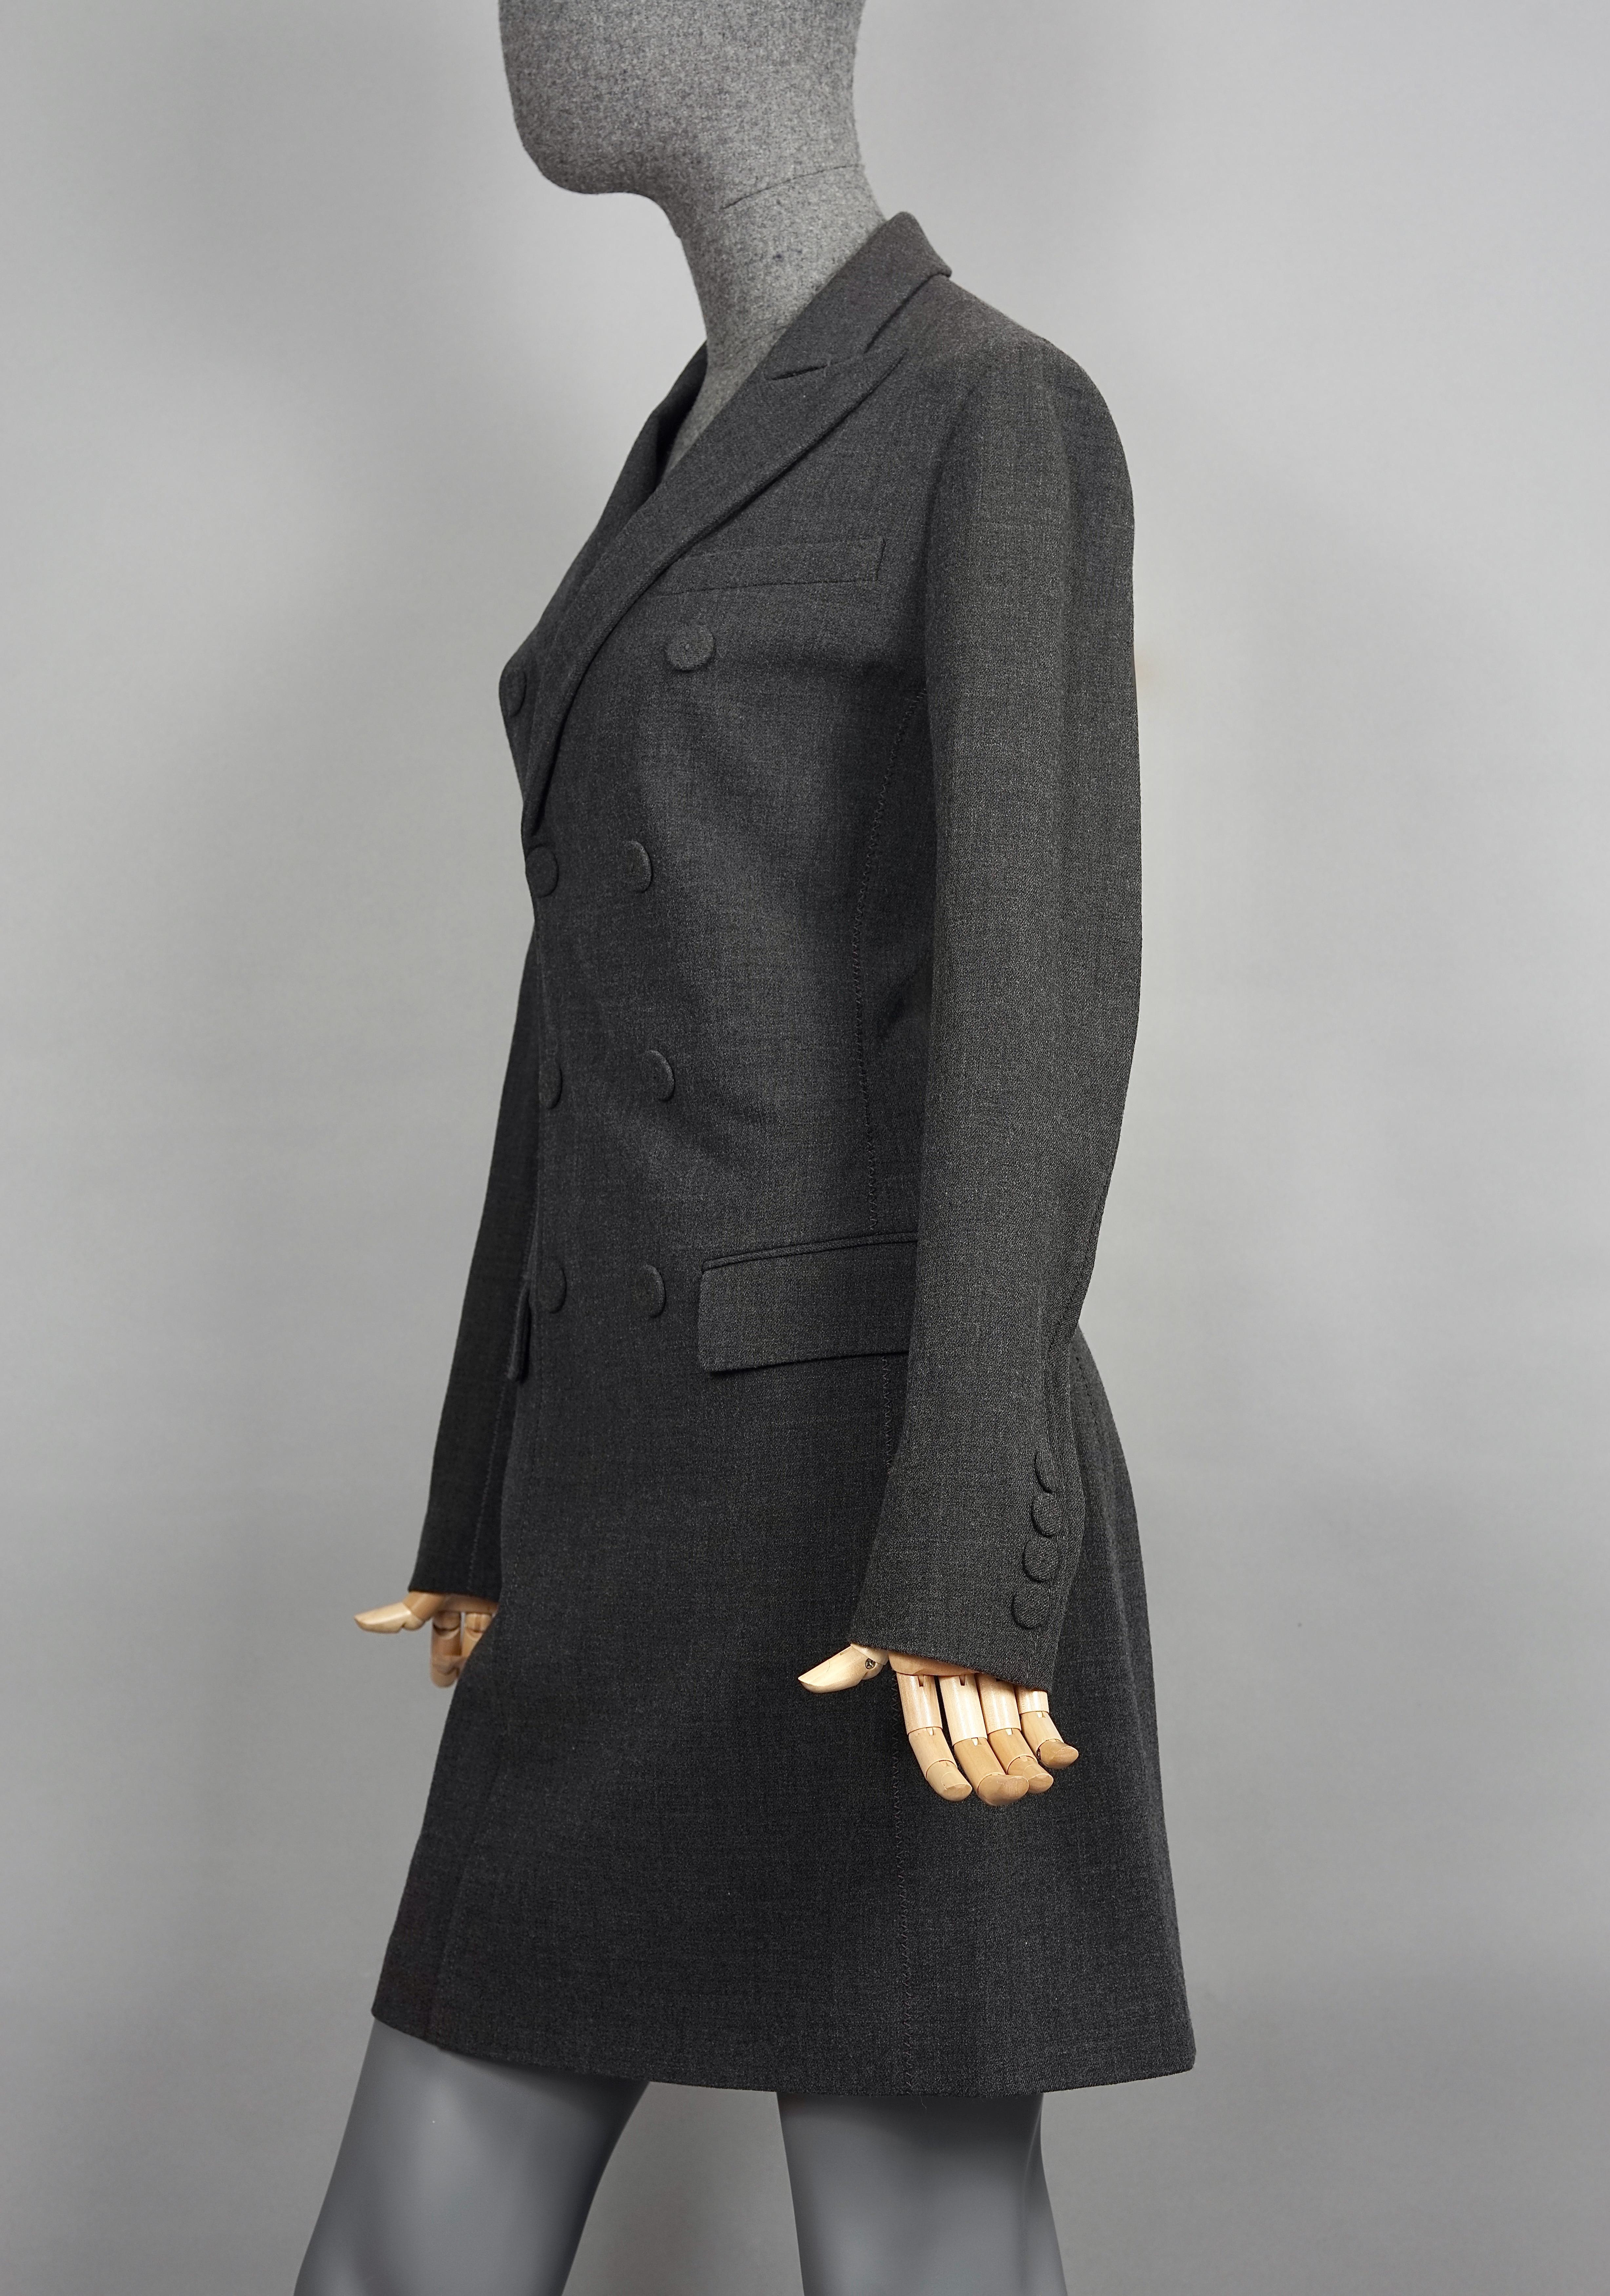 Black Vintage JEAN PAUL GAULTIER Smoking Double Breasted Wool Dress Suit